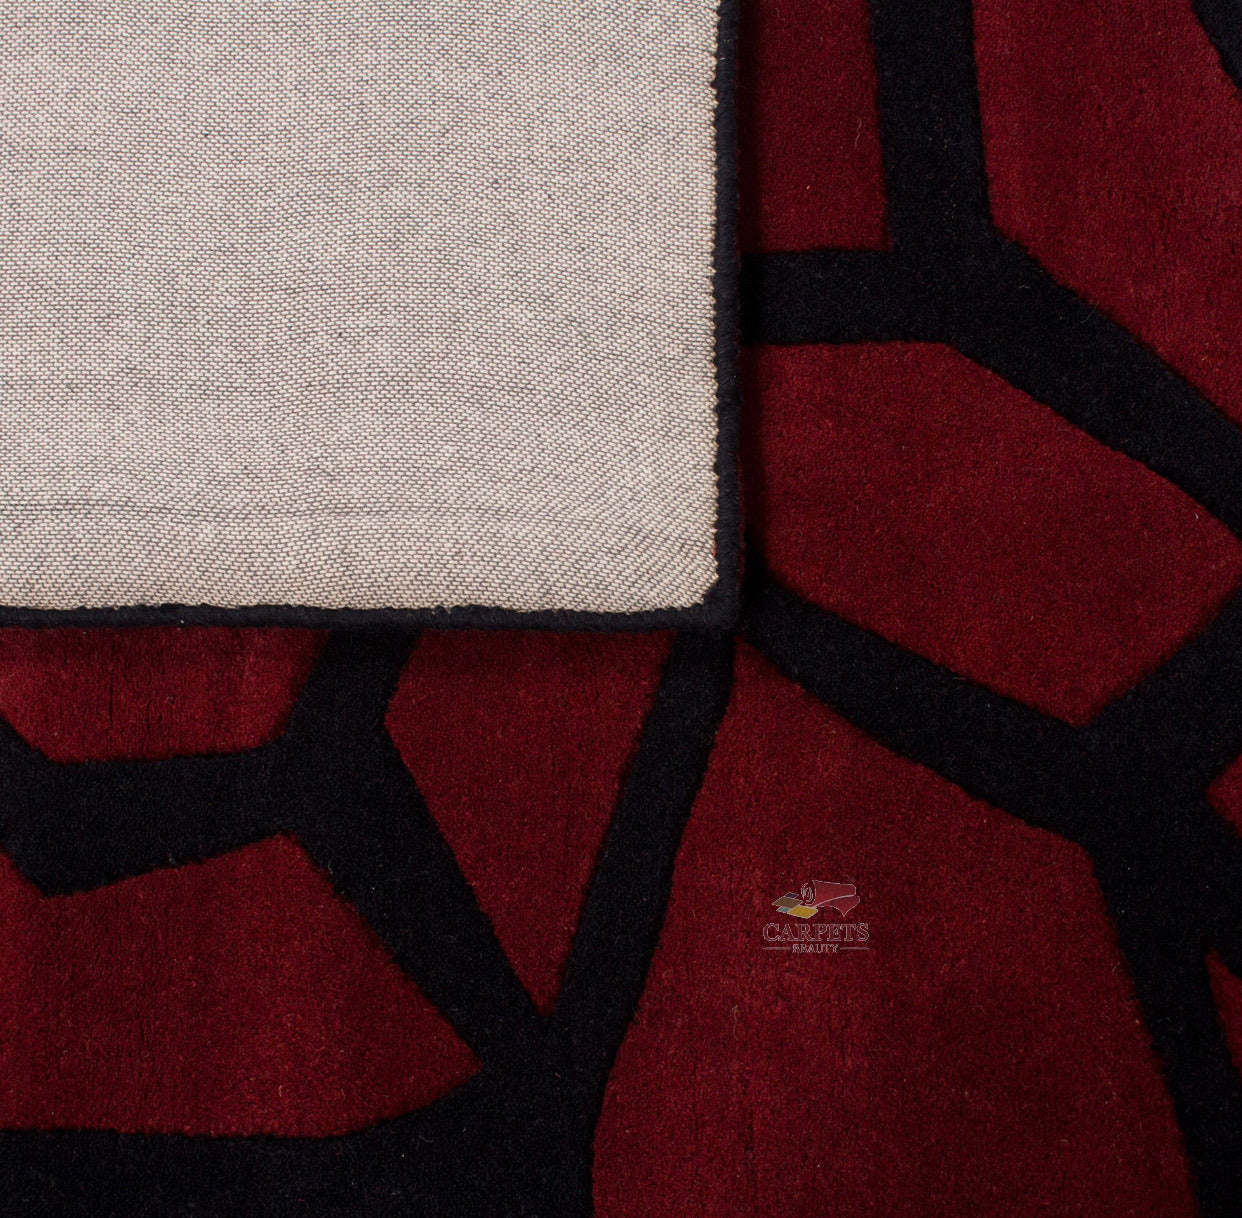 Red Black Modern Pattern Woolen Carpet for bedrooms and living rooms